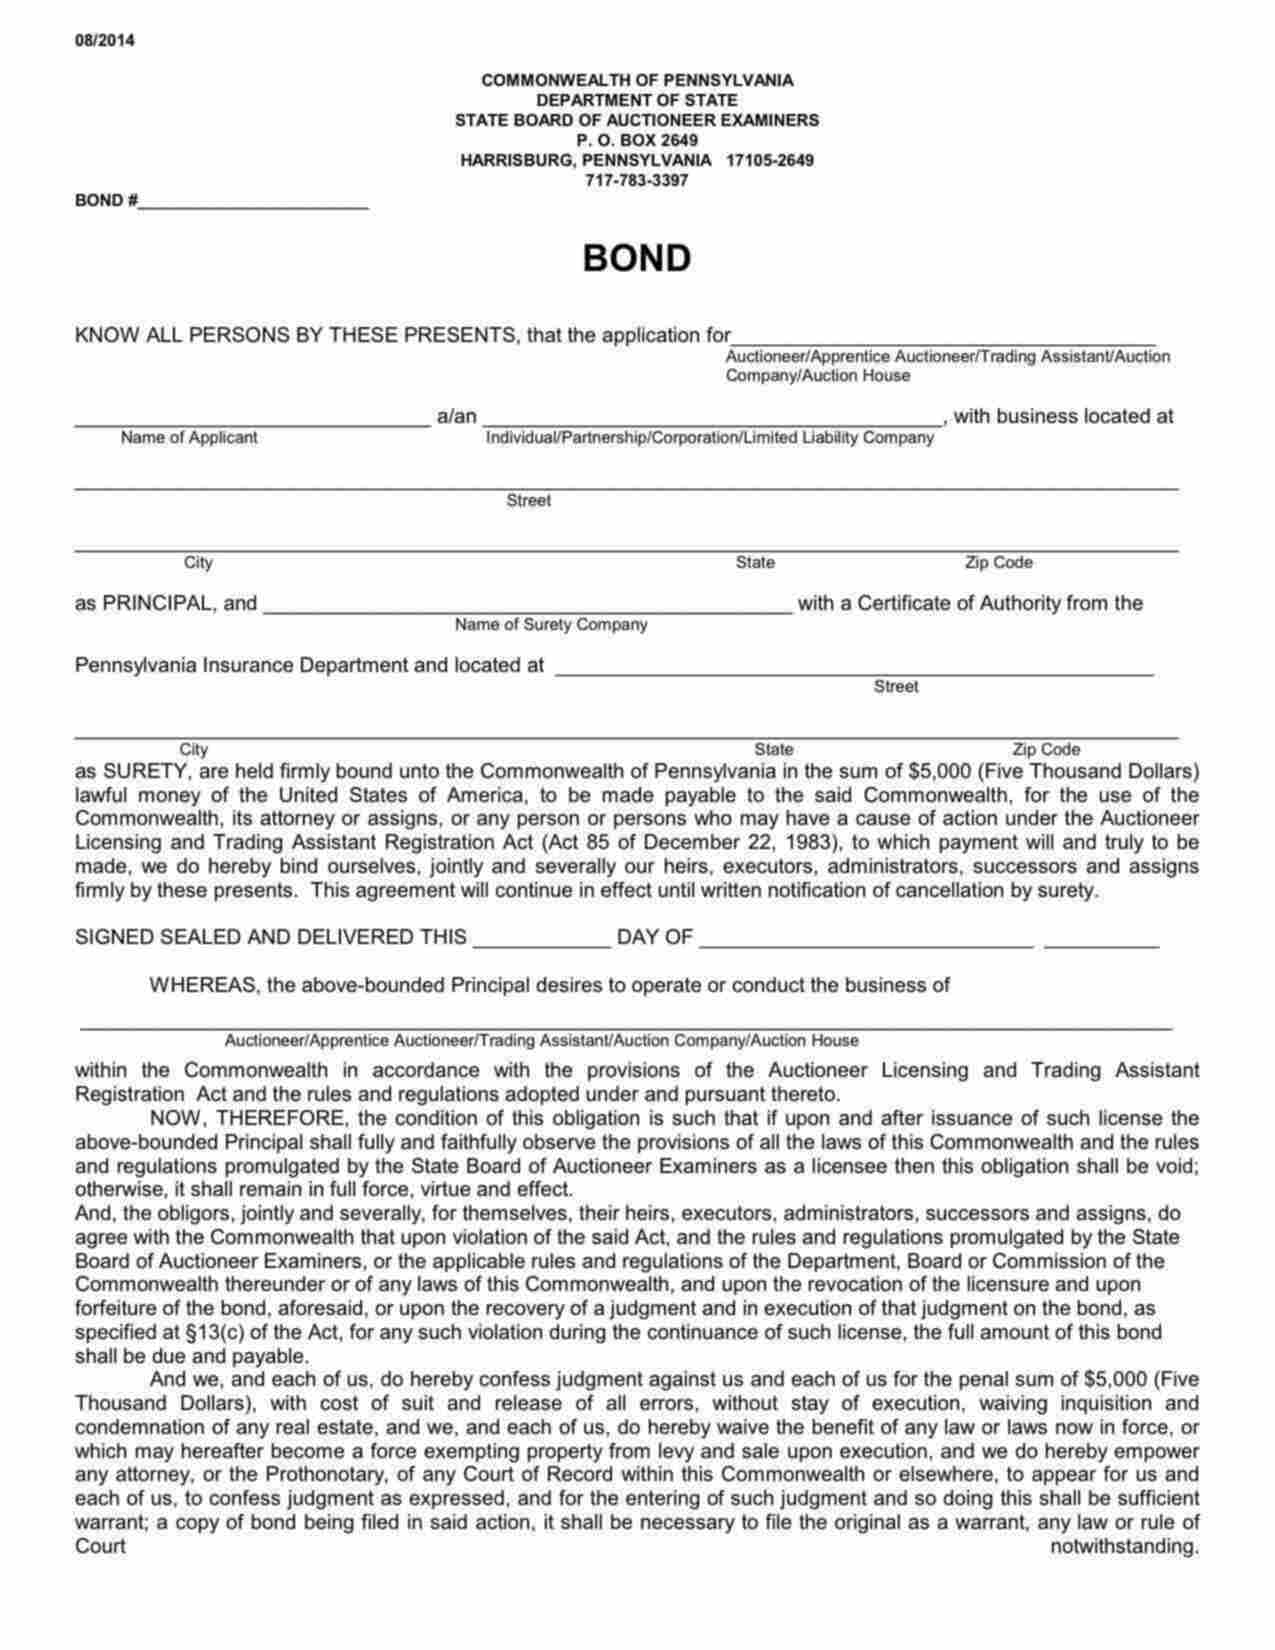 Pennsylvania Special License Applicant Bond Form